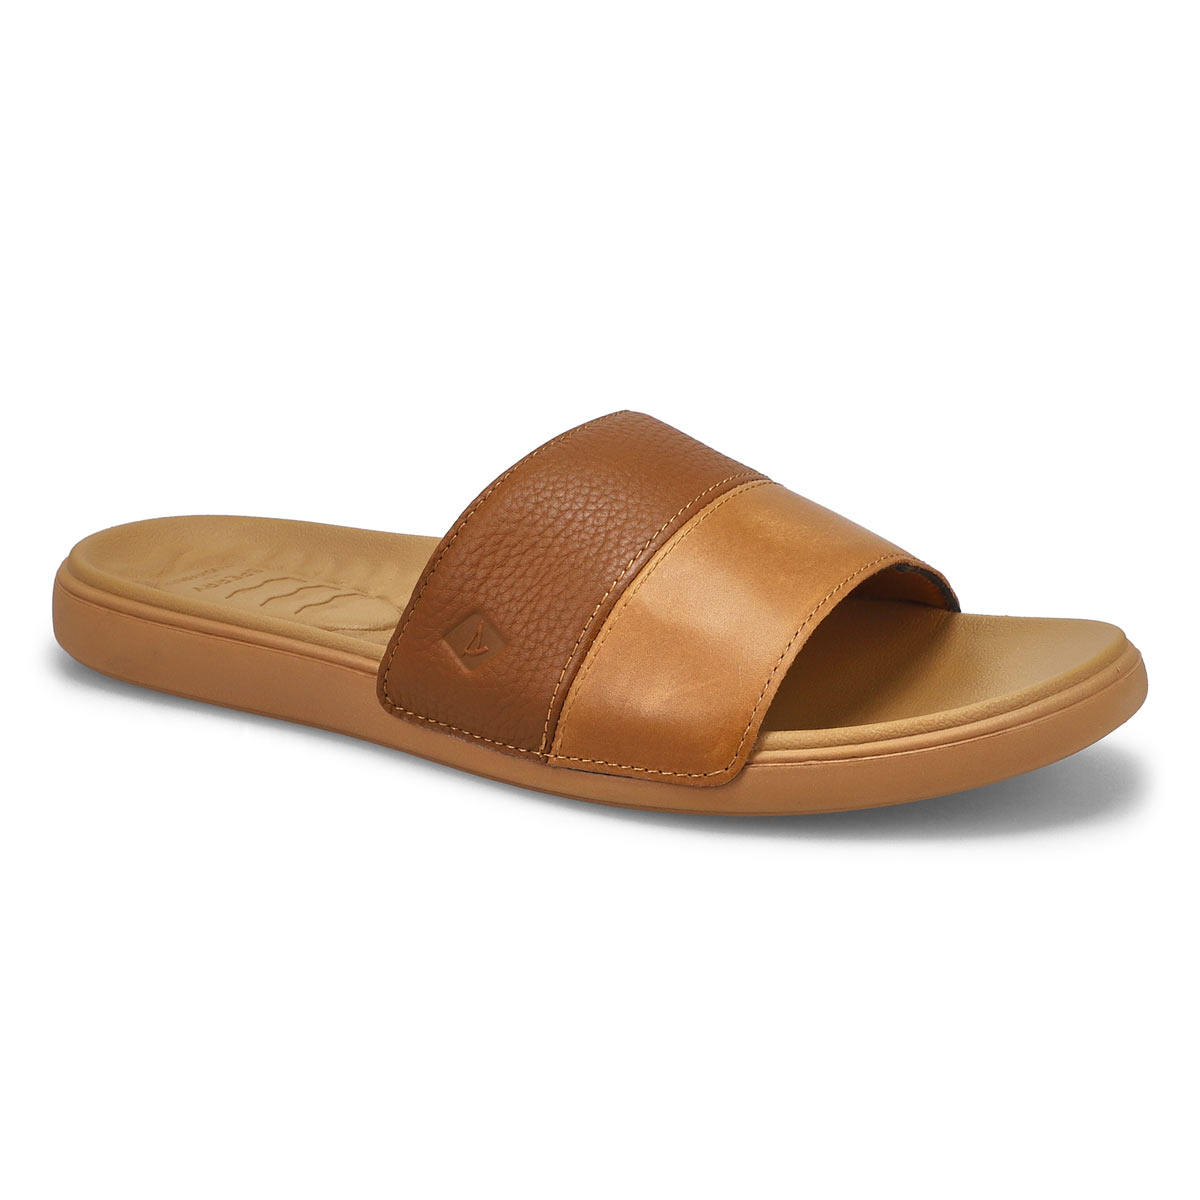 Men's Plushwave Dock Slide Sandal - Tan